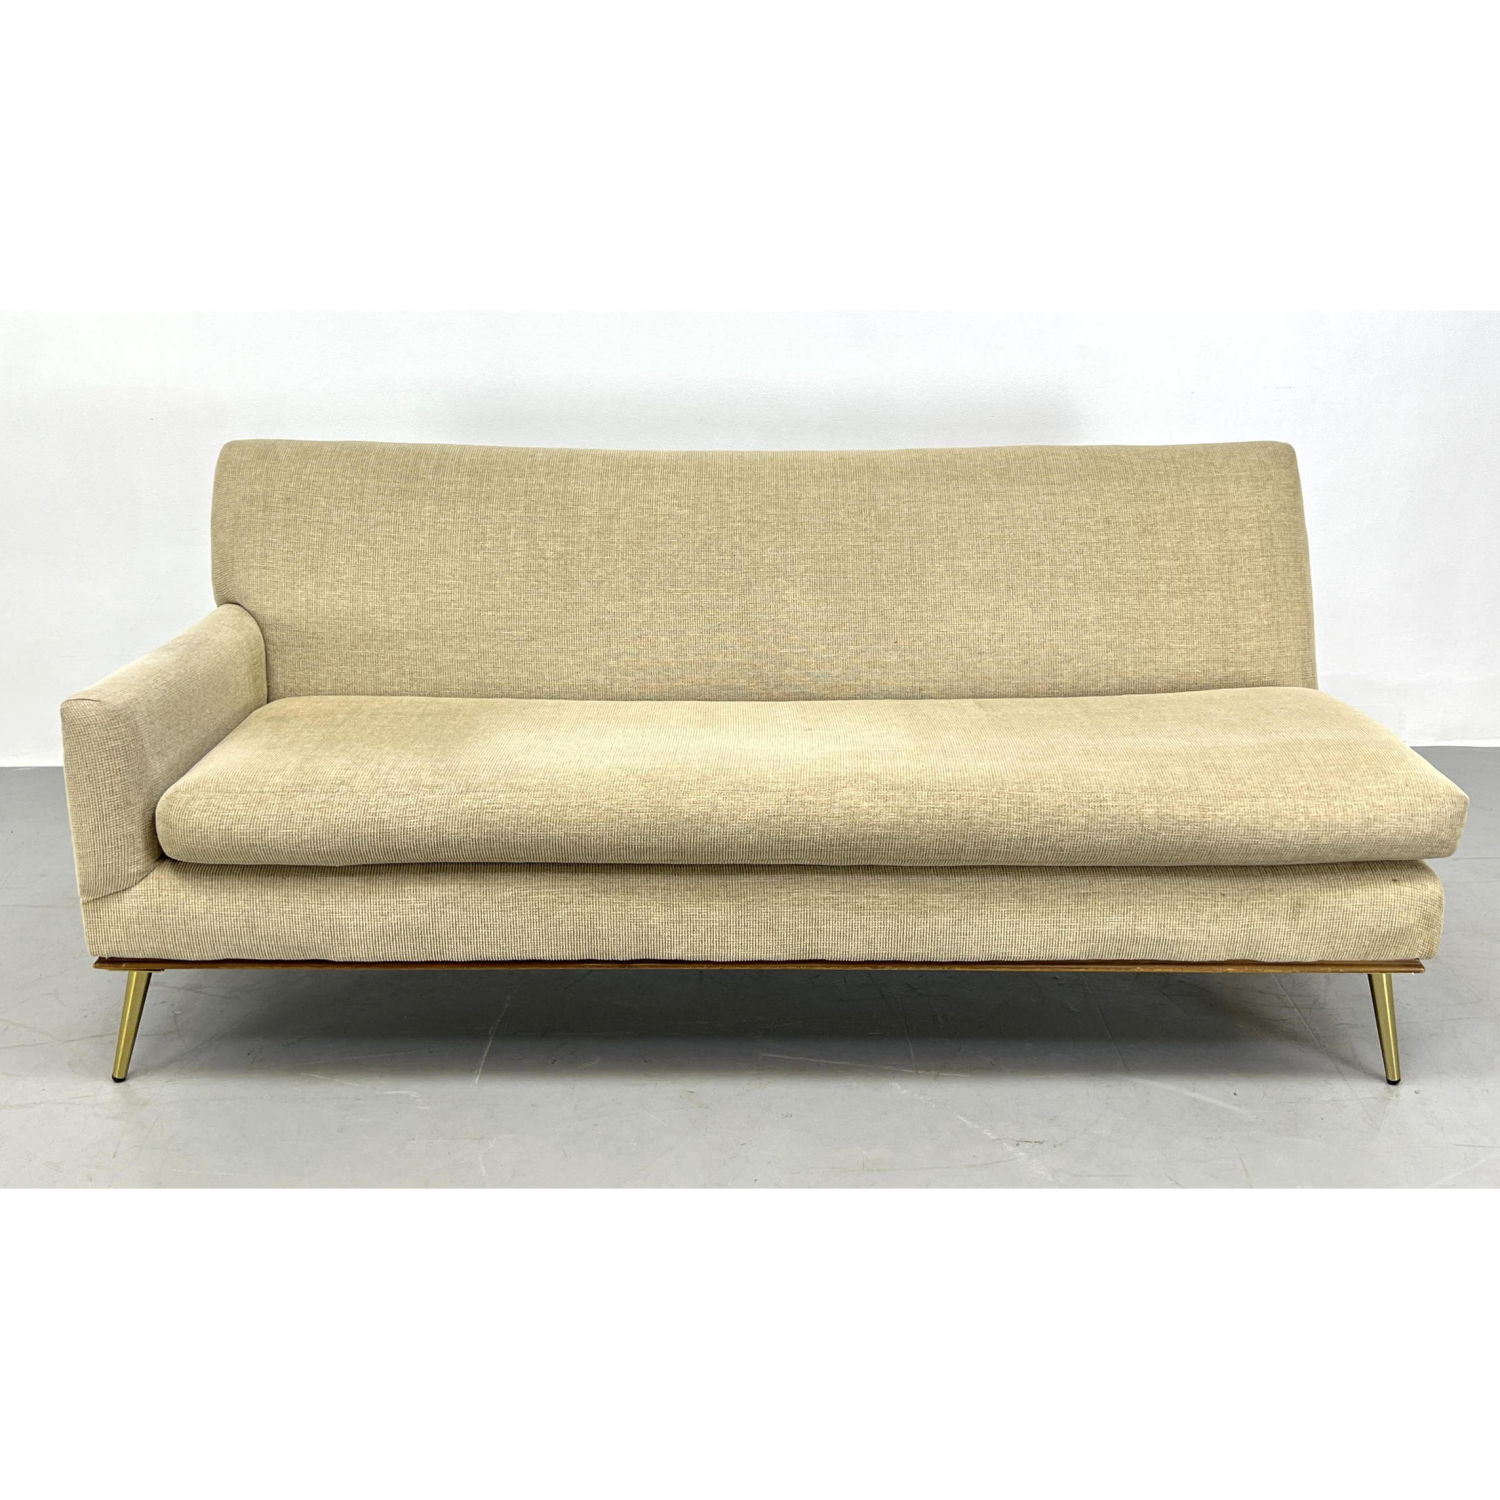 Modernist Single Arm Sofa Couch  2b95d8